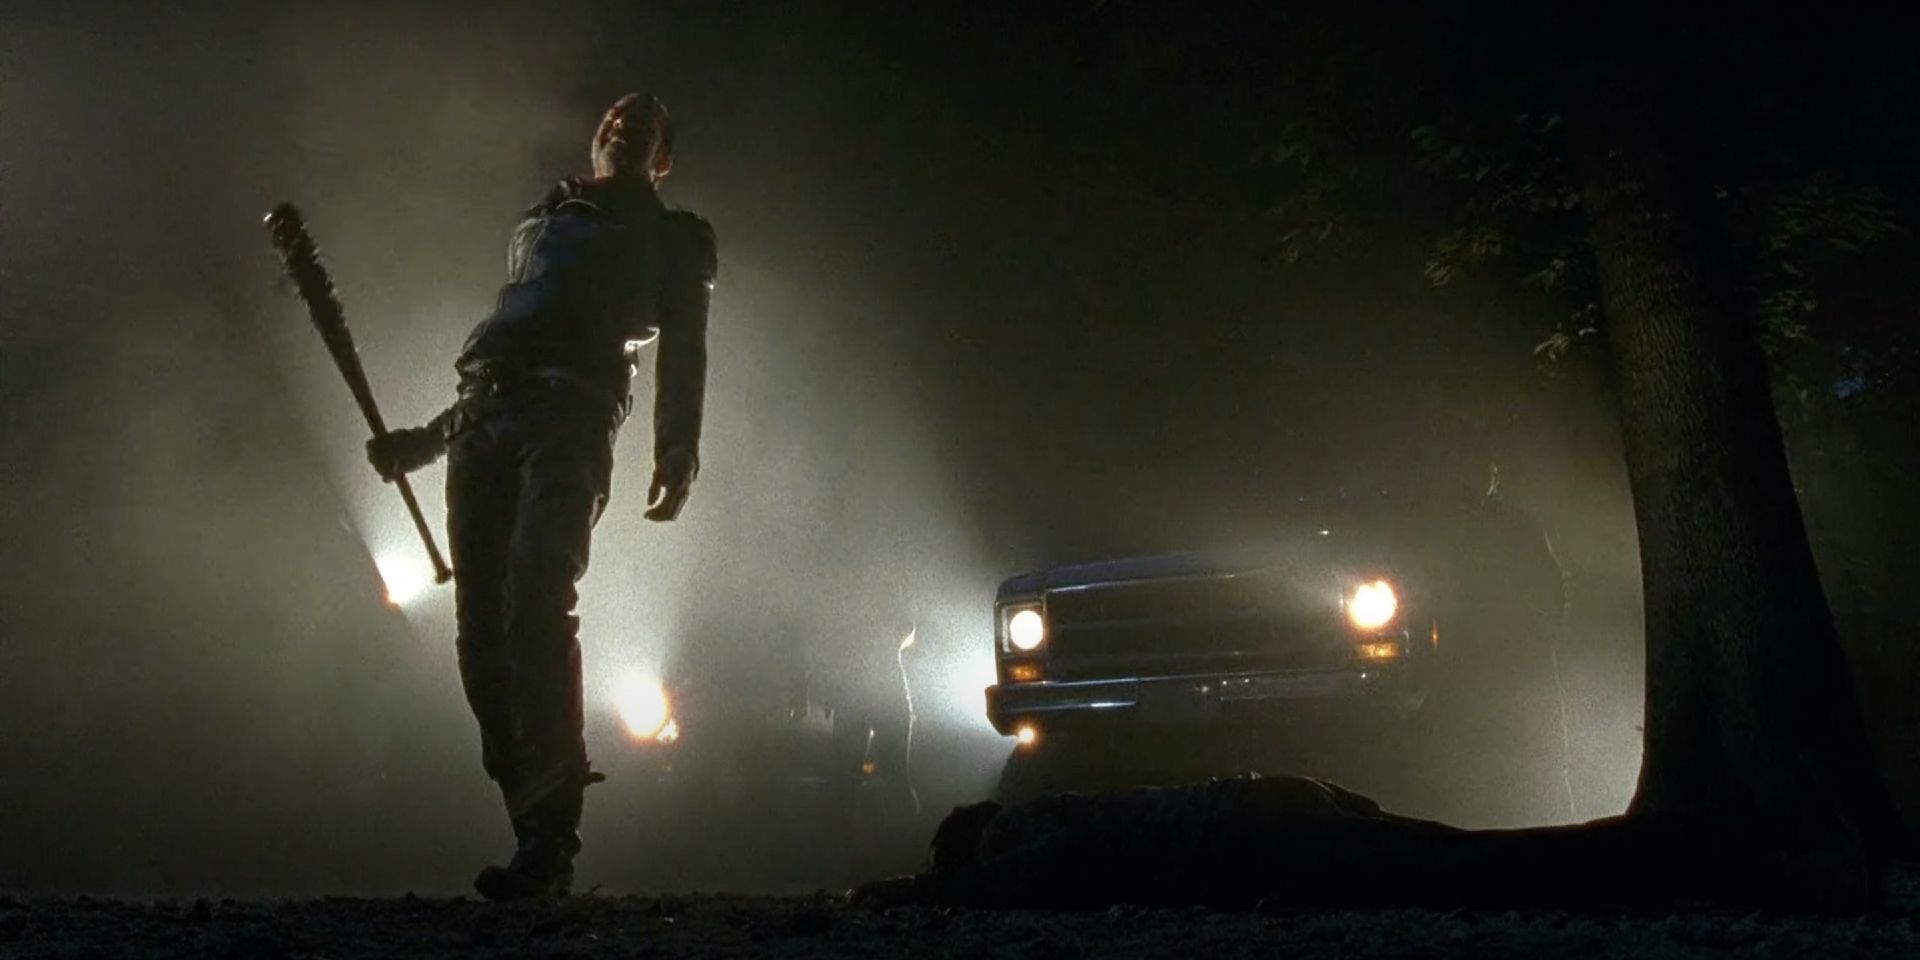 Negan (Jeffrey Dean Morgan) stands delighted before Glenn's (Steven Yeun) body as car headlights stream from behind him.